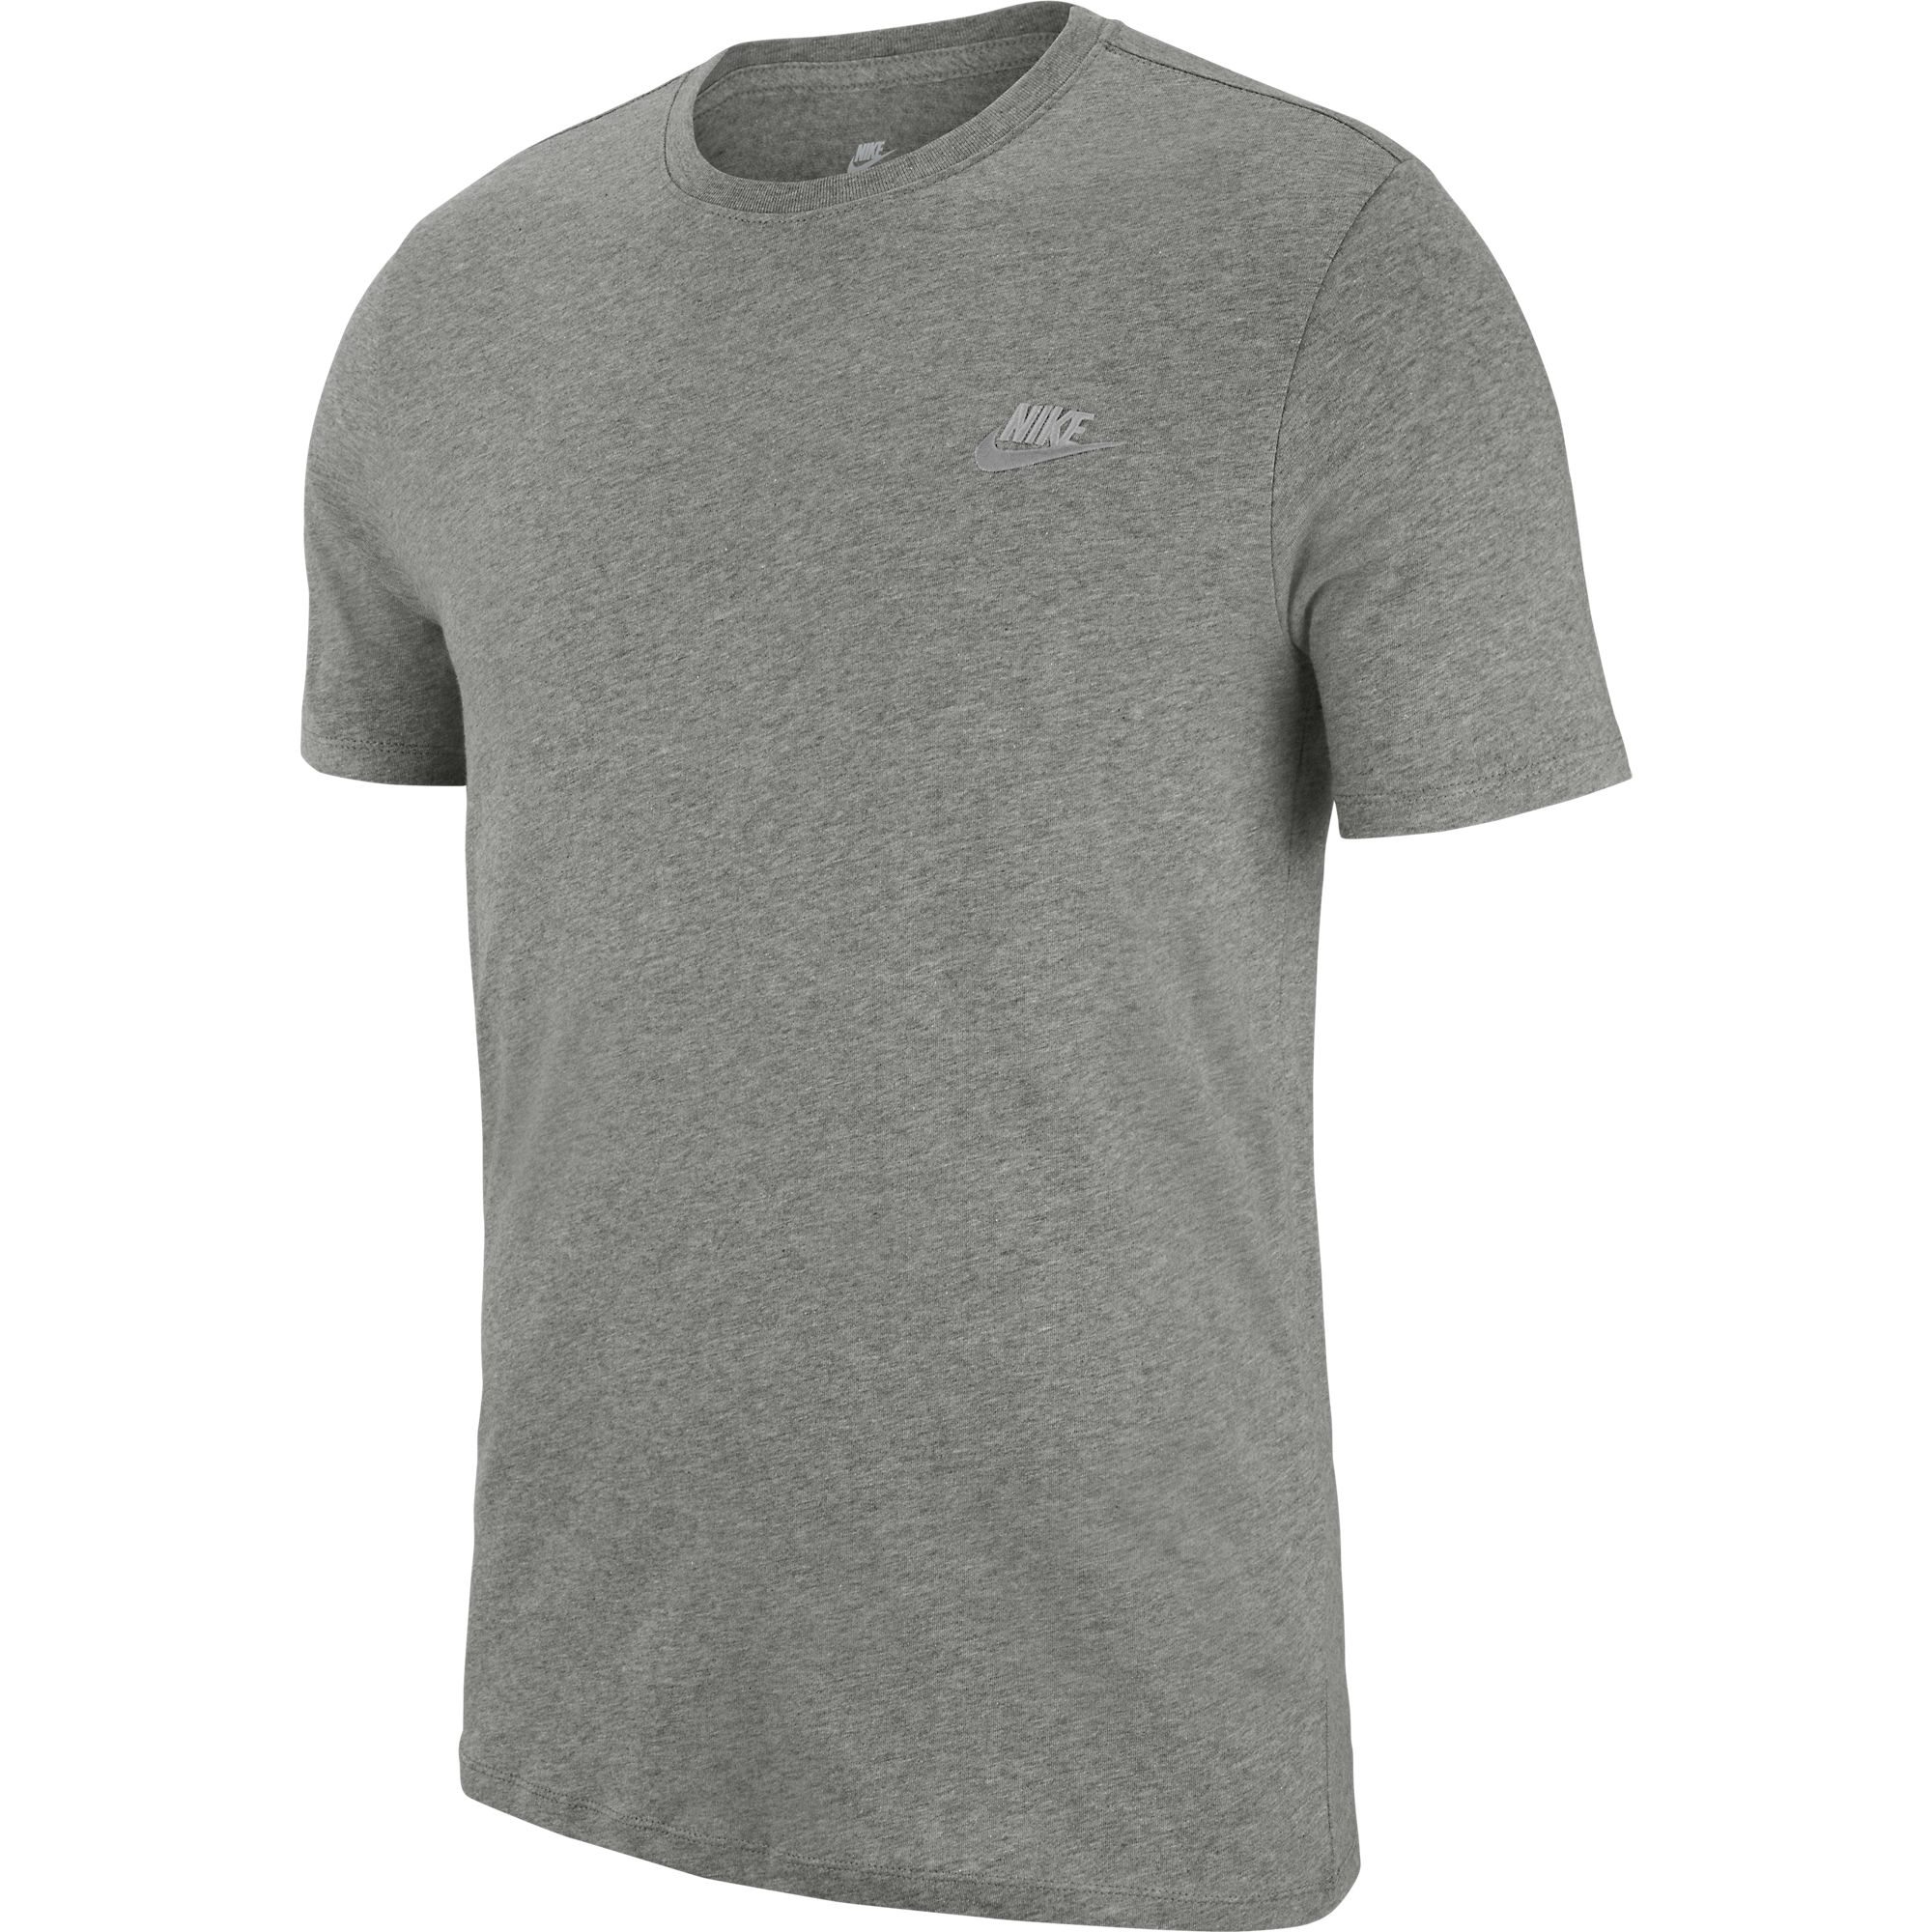 T-Shirt Grey-Black 827021-063 